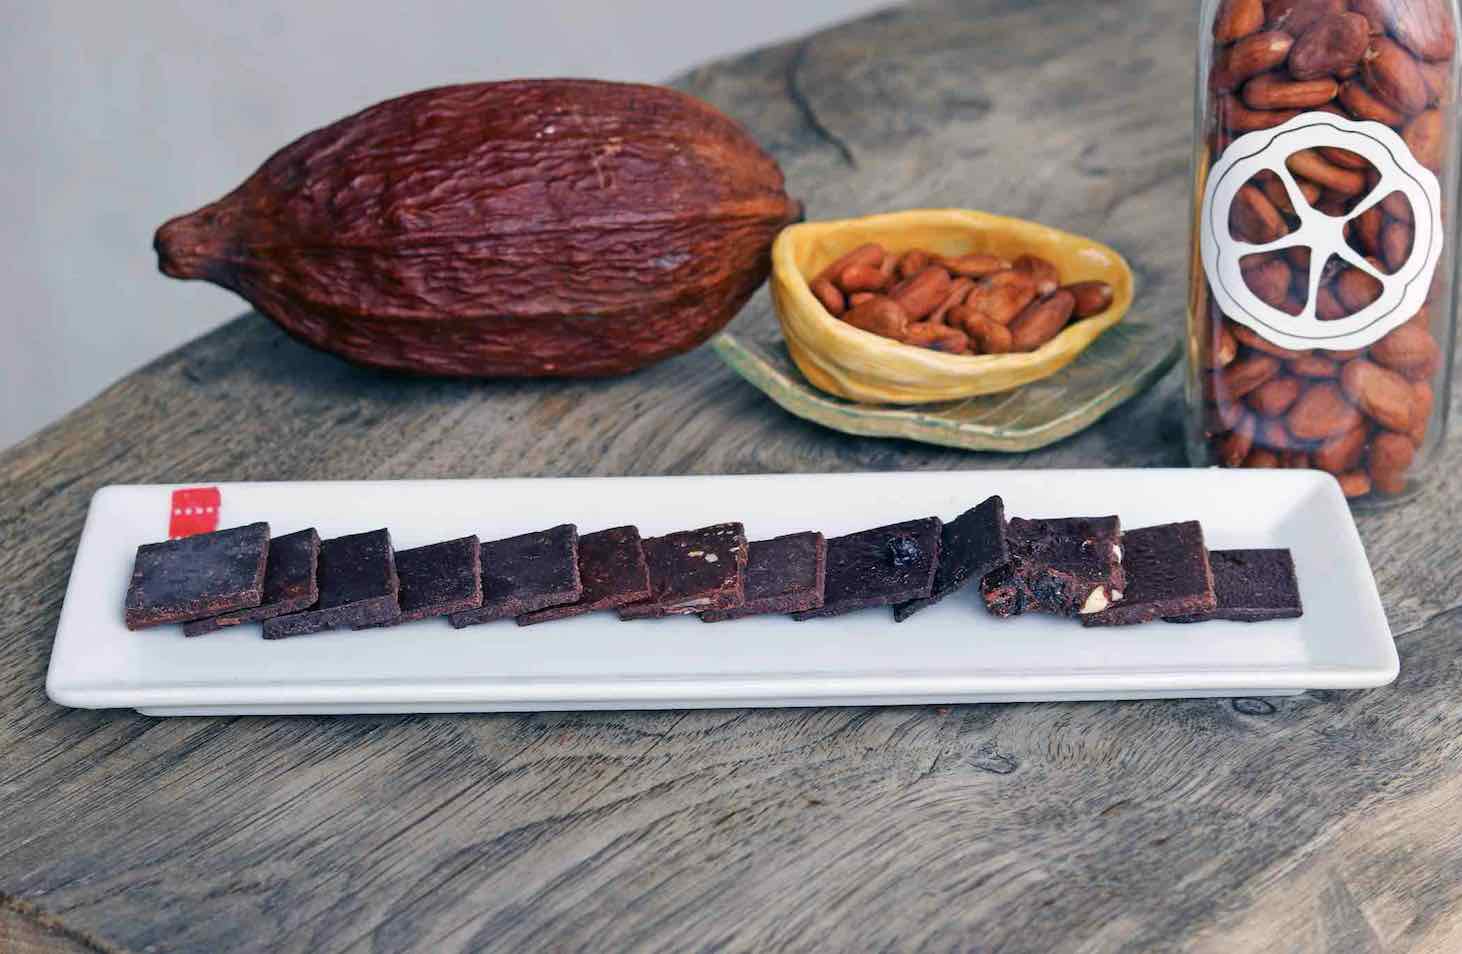 How to enjoy a proper chocolate tasting at ChocoVivo - ChocoVivo